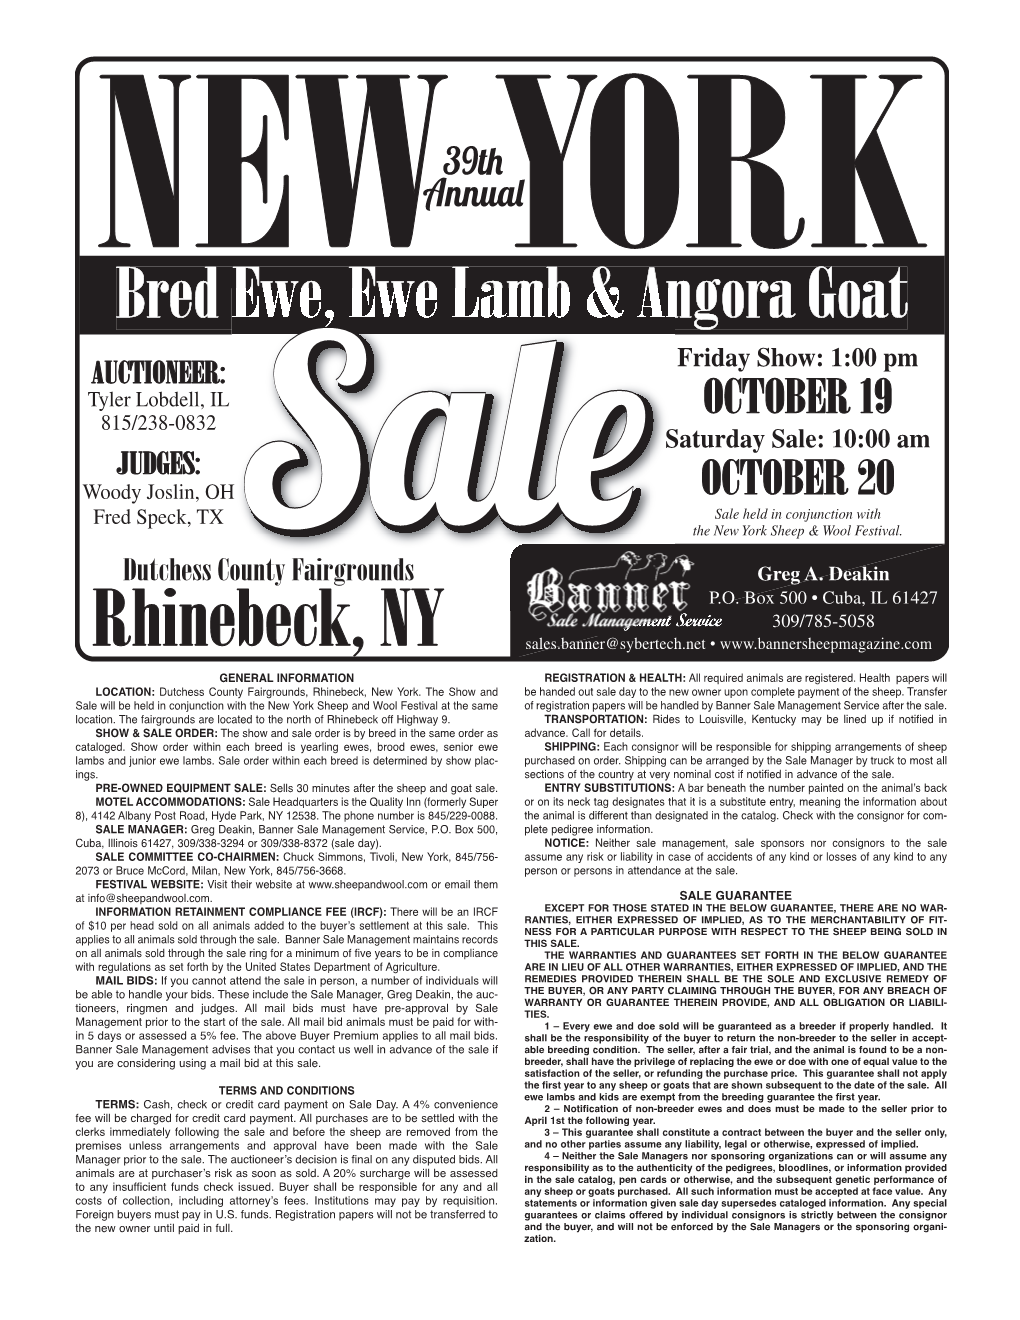 2018 New York Bred Ewe Sale Catalog